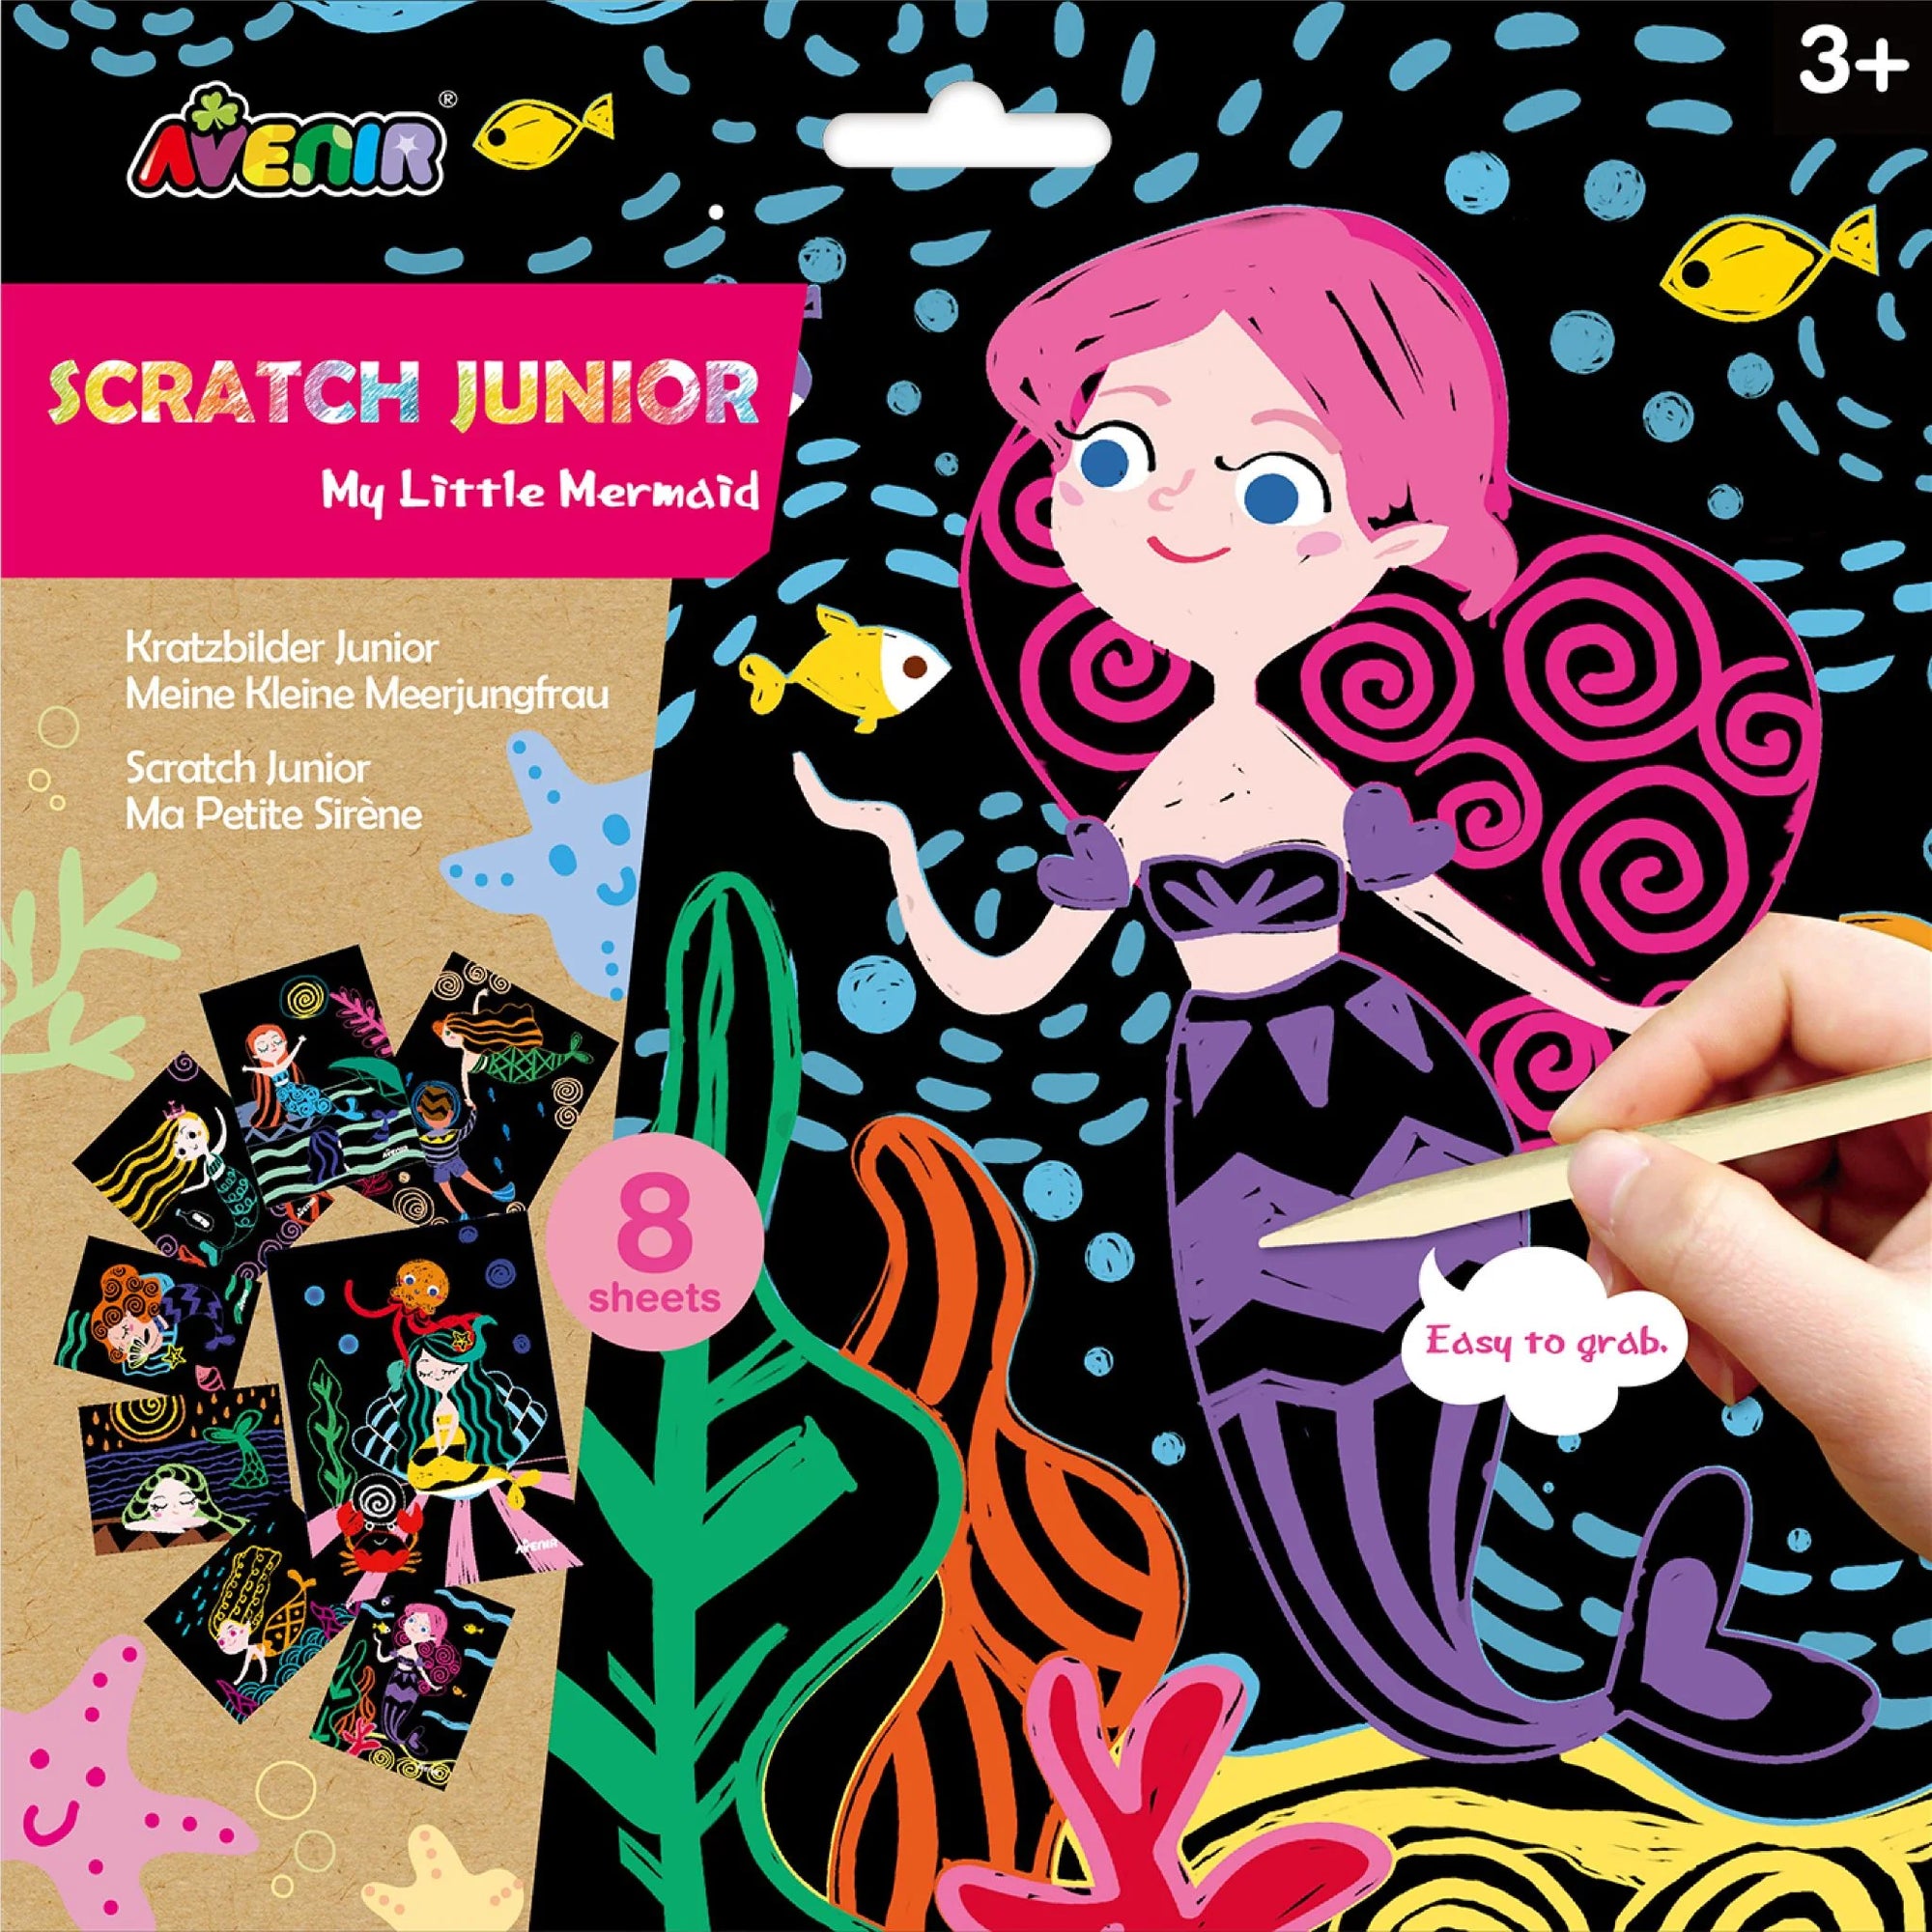 Avenir Scratch Junior - My Little Mermaid